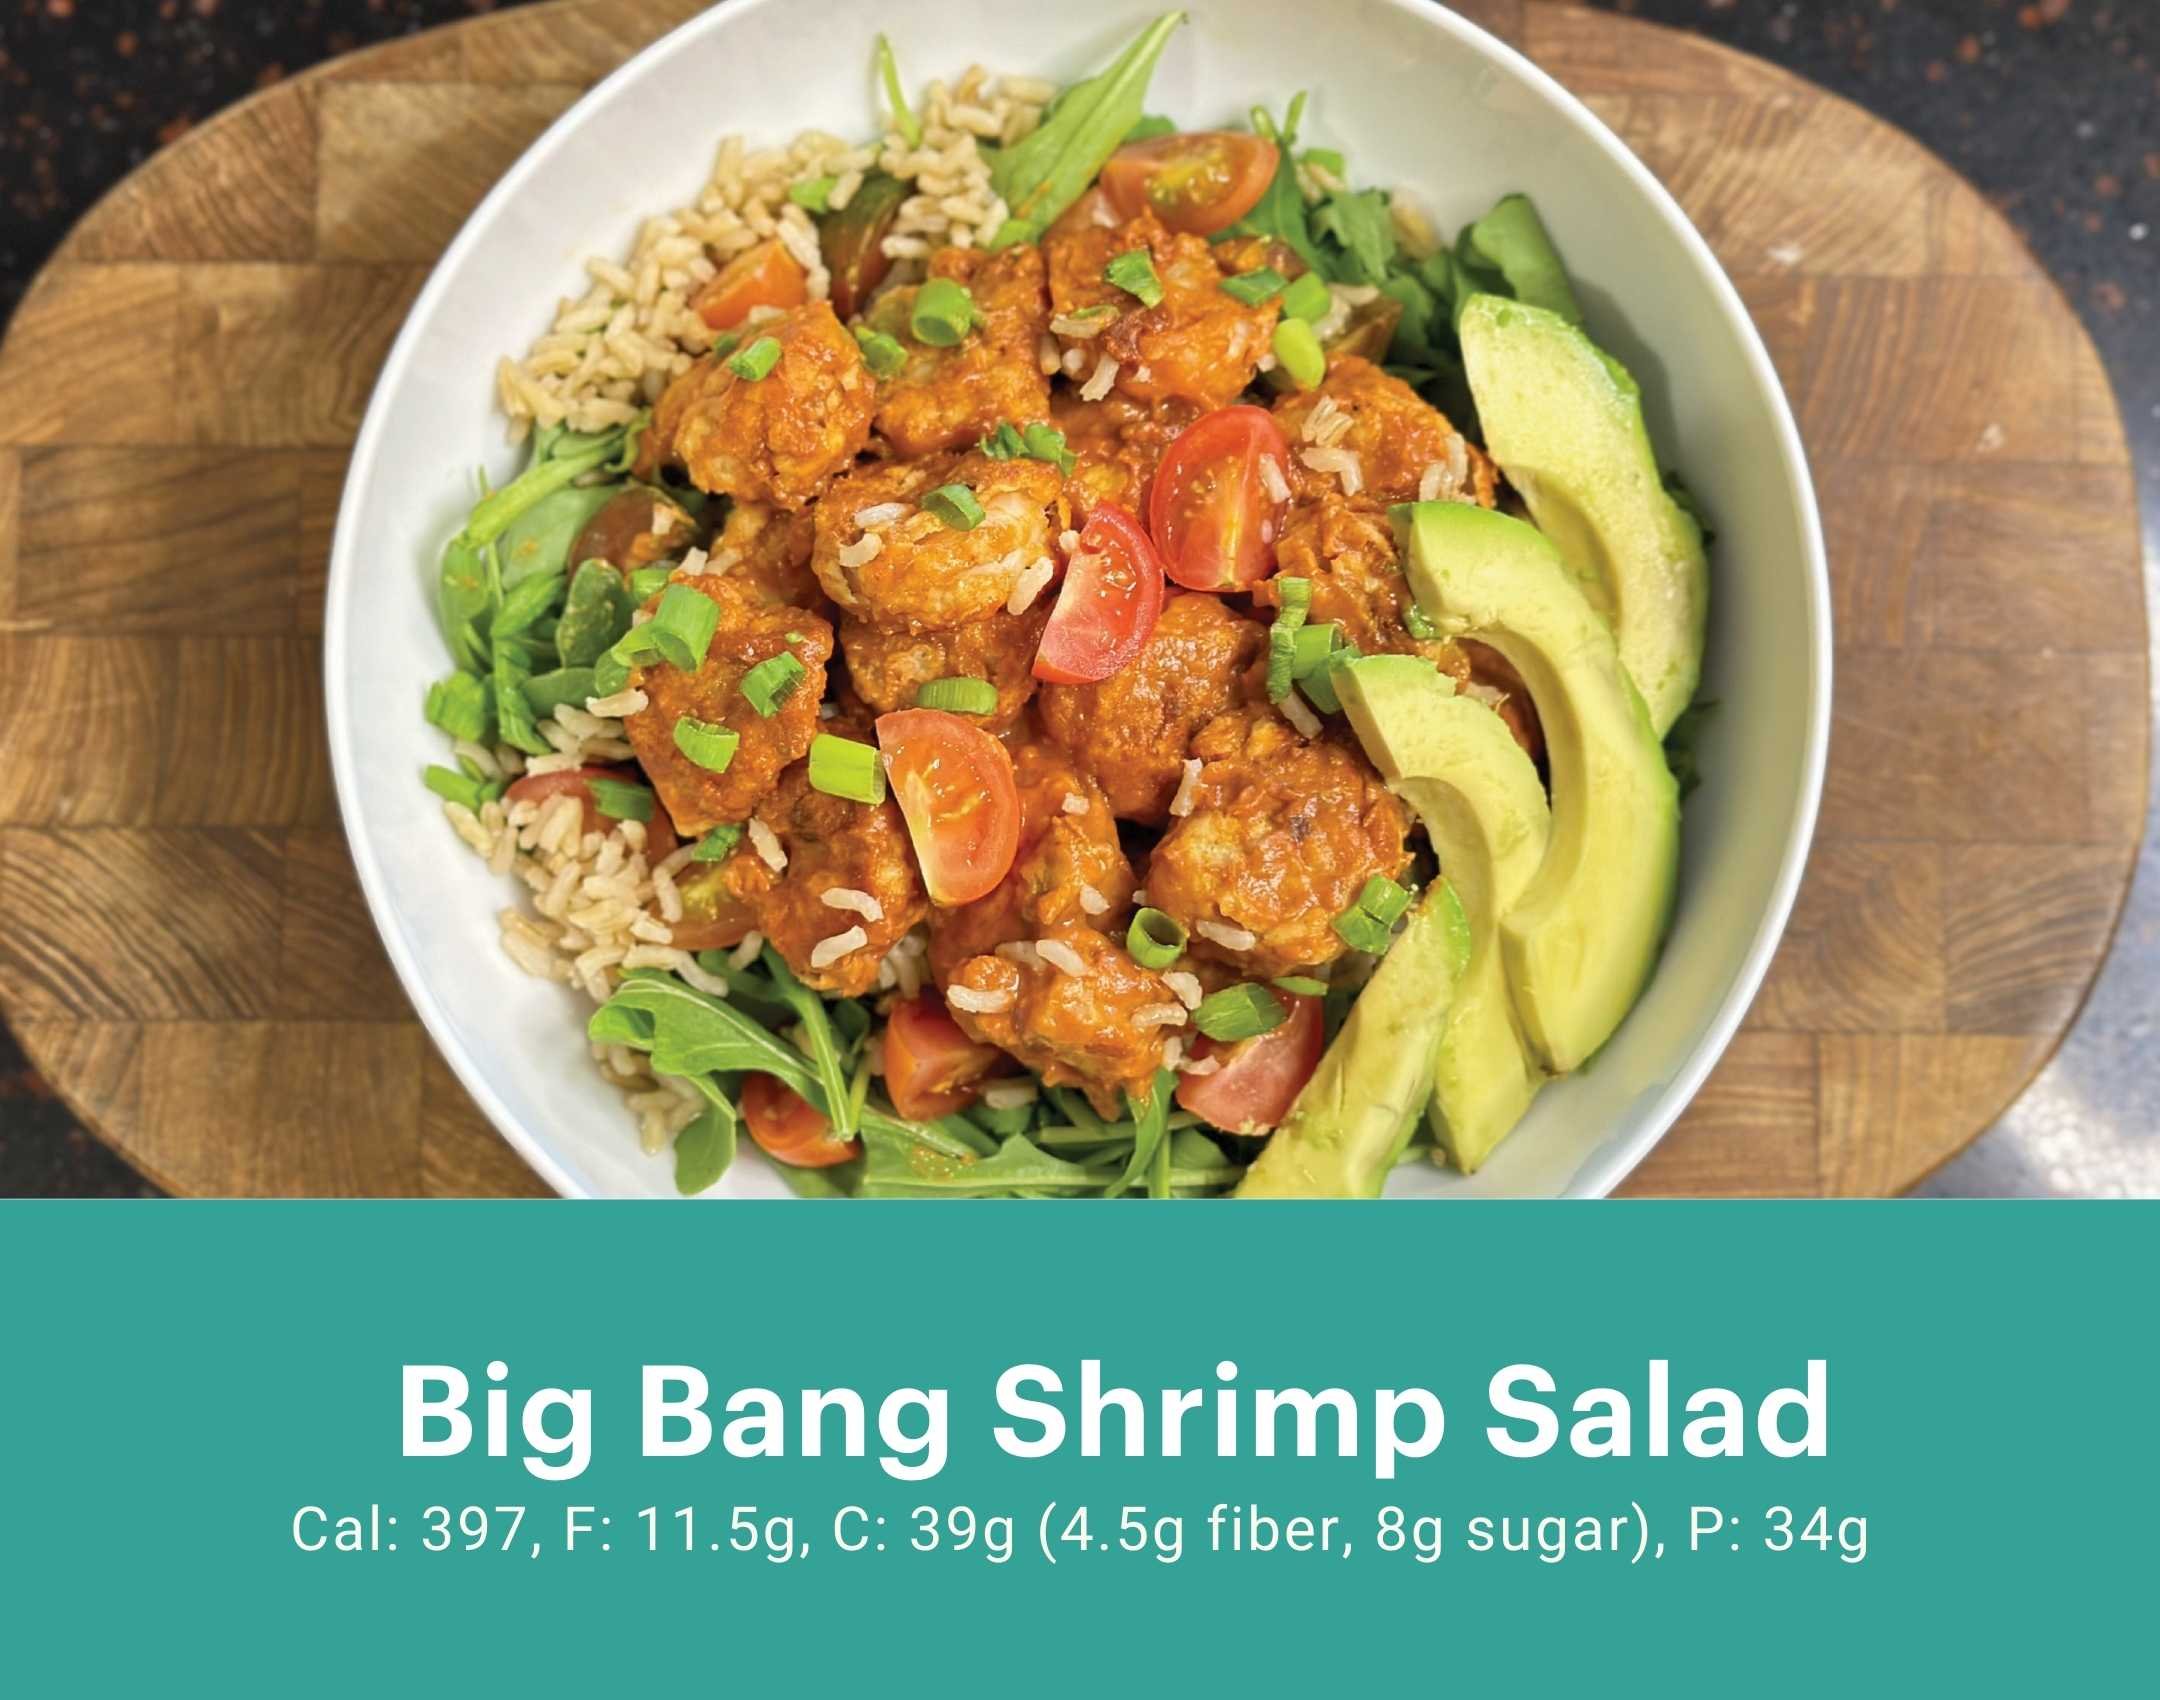 Big Bang Shrimp Salad.jpg